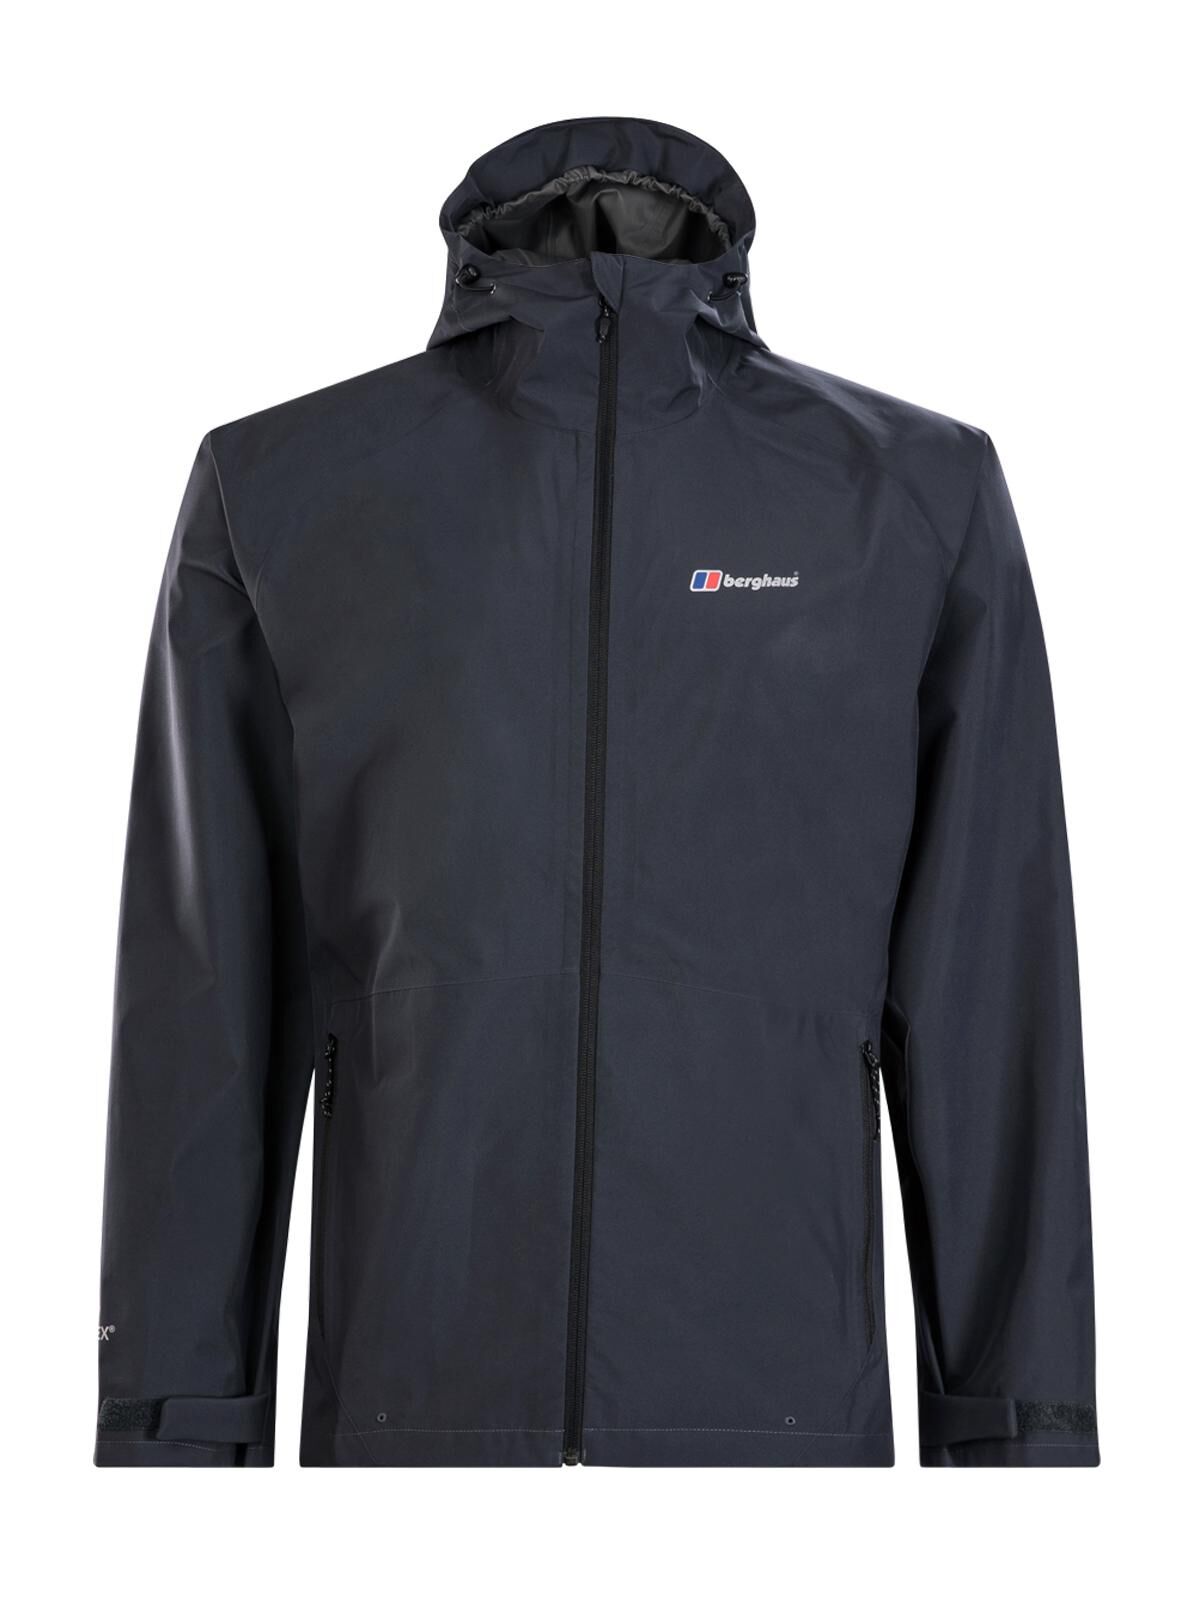 Berghaus Paclite 2.0 Waterproof Jacket - Giacca antipioggia - Uomo